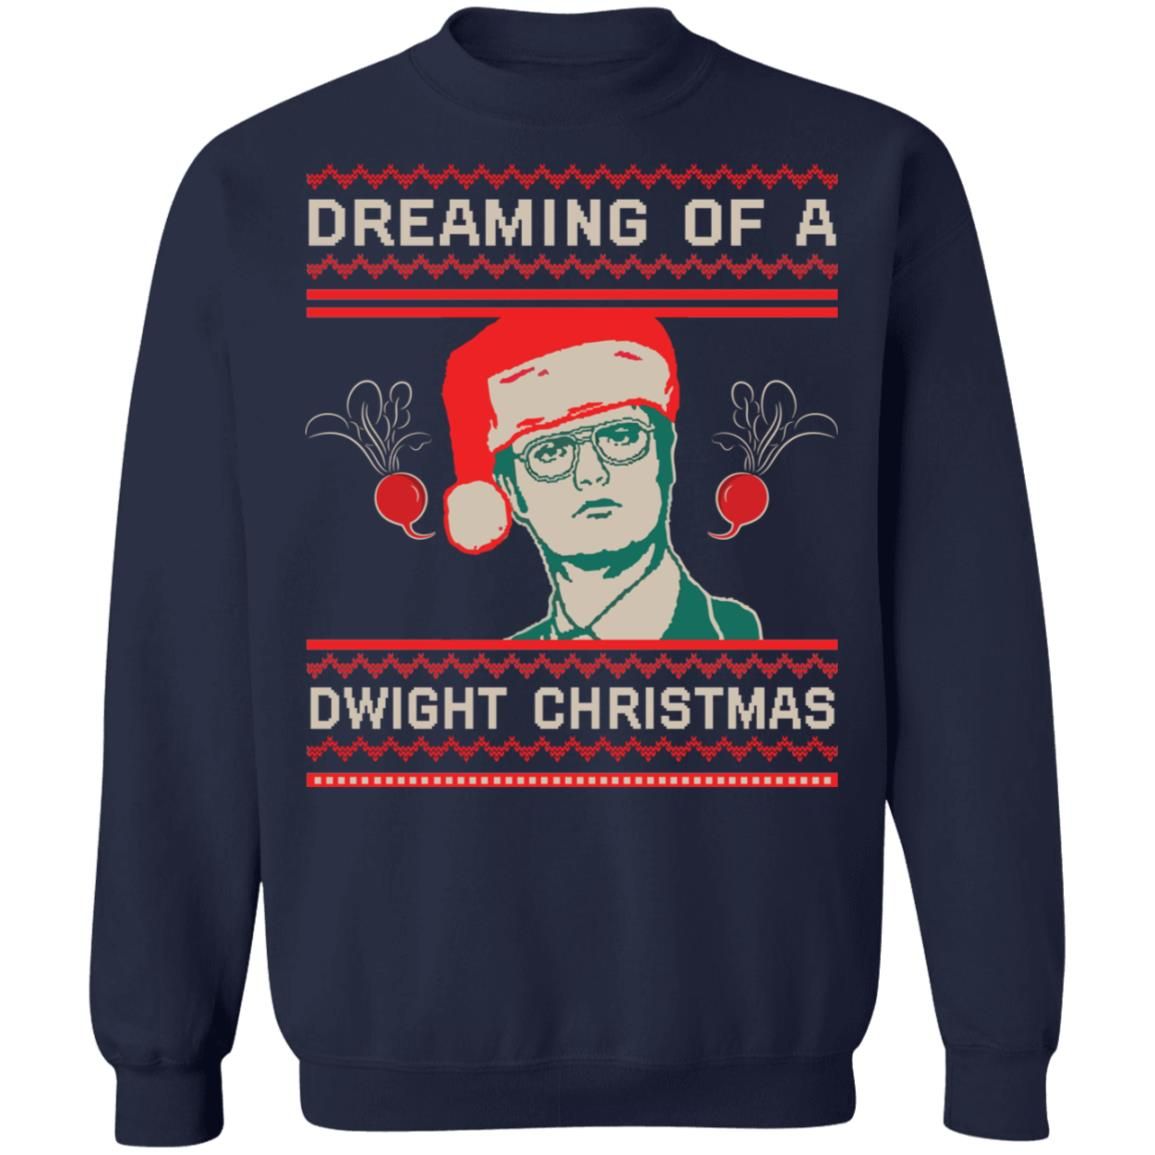 Dreaming Of A Dwight Christmas Unisex Sweatshirt